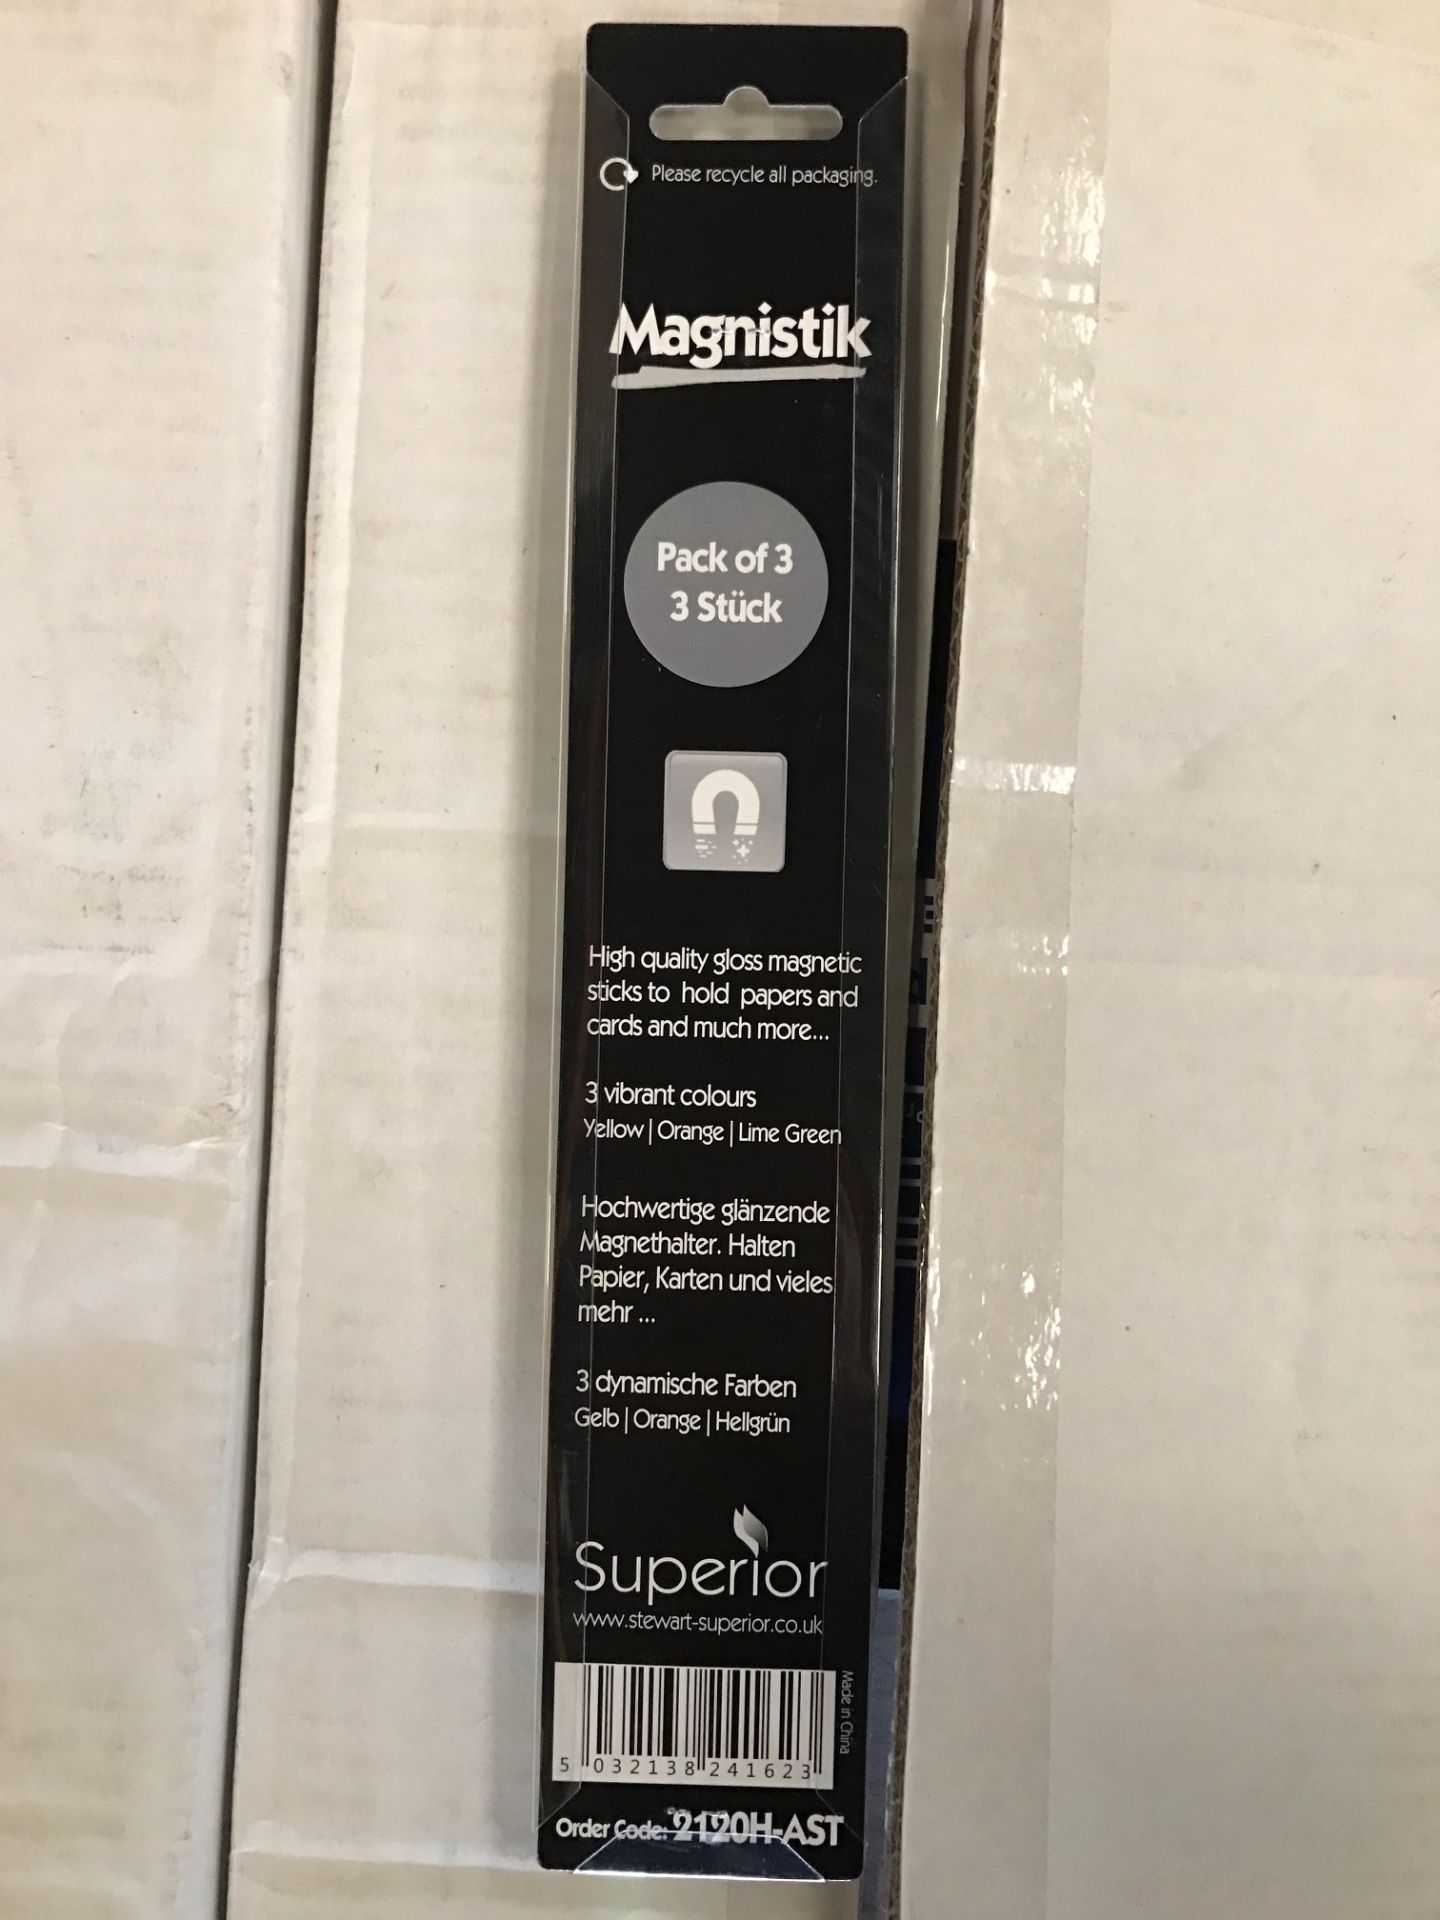 50 x Packs of Magnistix Magnetic Slim Bars - Brand New & Boxed, RRP £3.99 Per Pack - Image 2 of 2